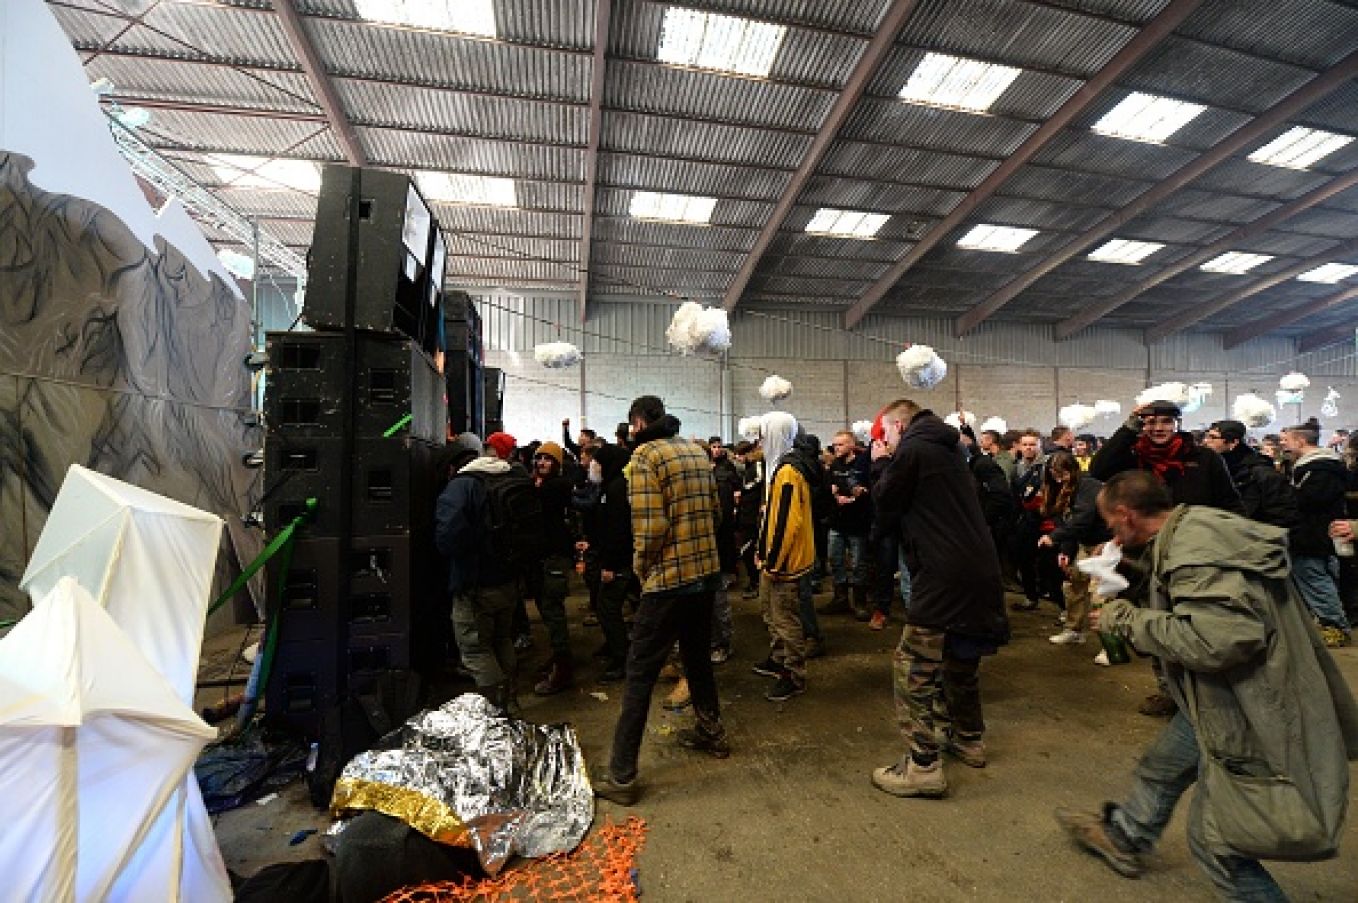 People Dance During The Rave. Photo: Jean-Francois Monier/Afp Via Getty Images